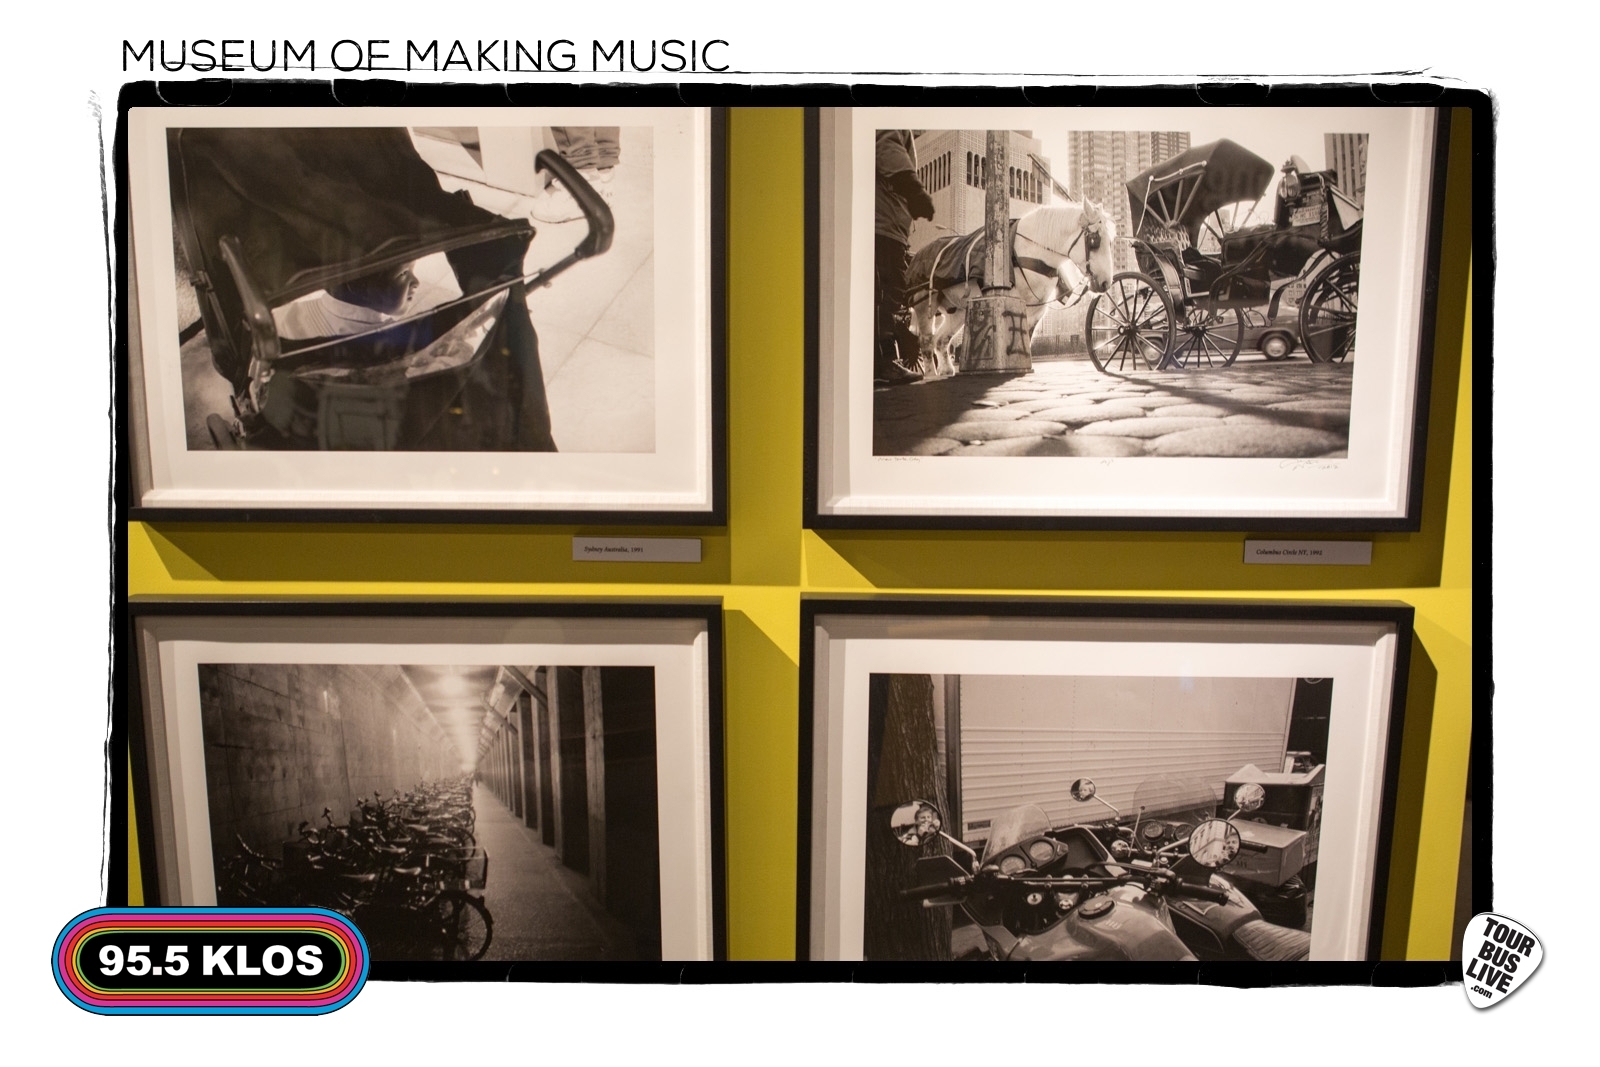 Museum of Making Music, Carlsbad, California. © 2017 TourBusLive.com